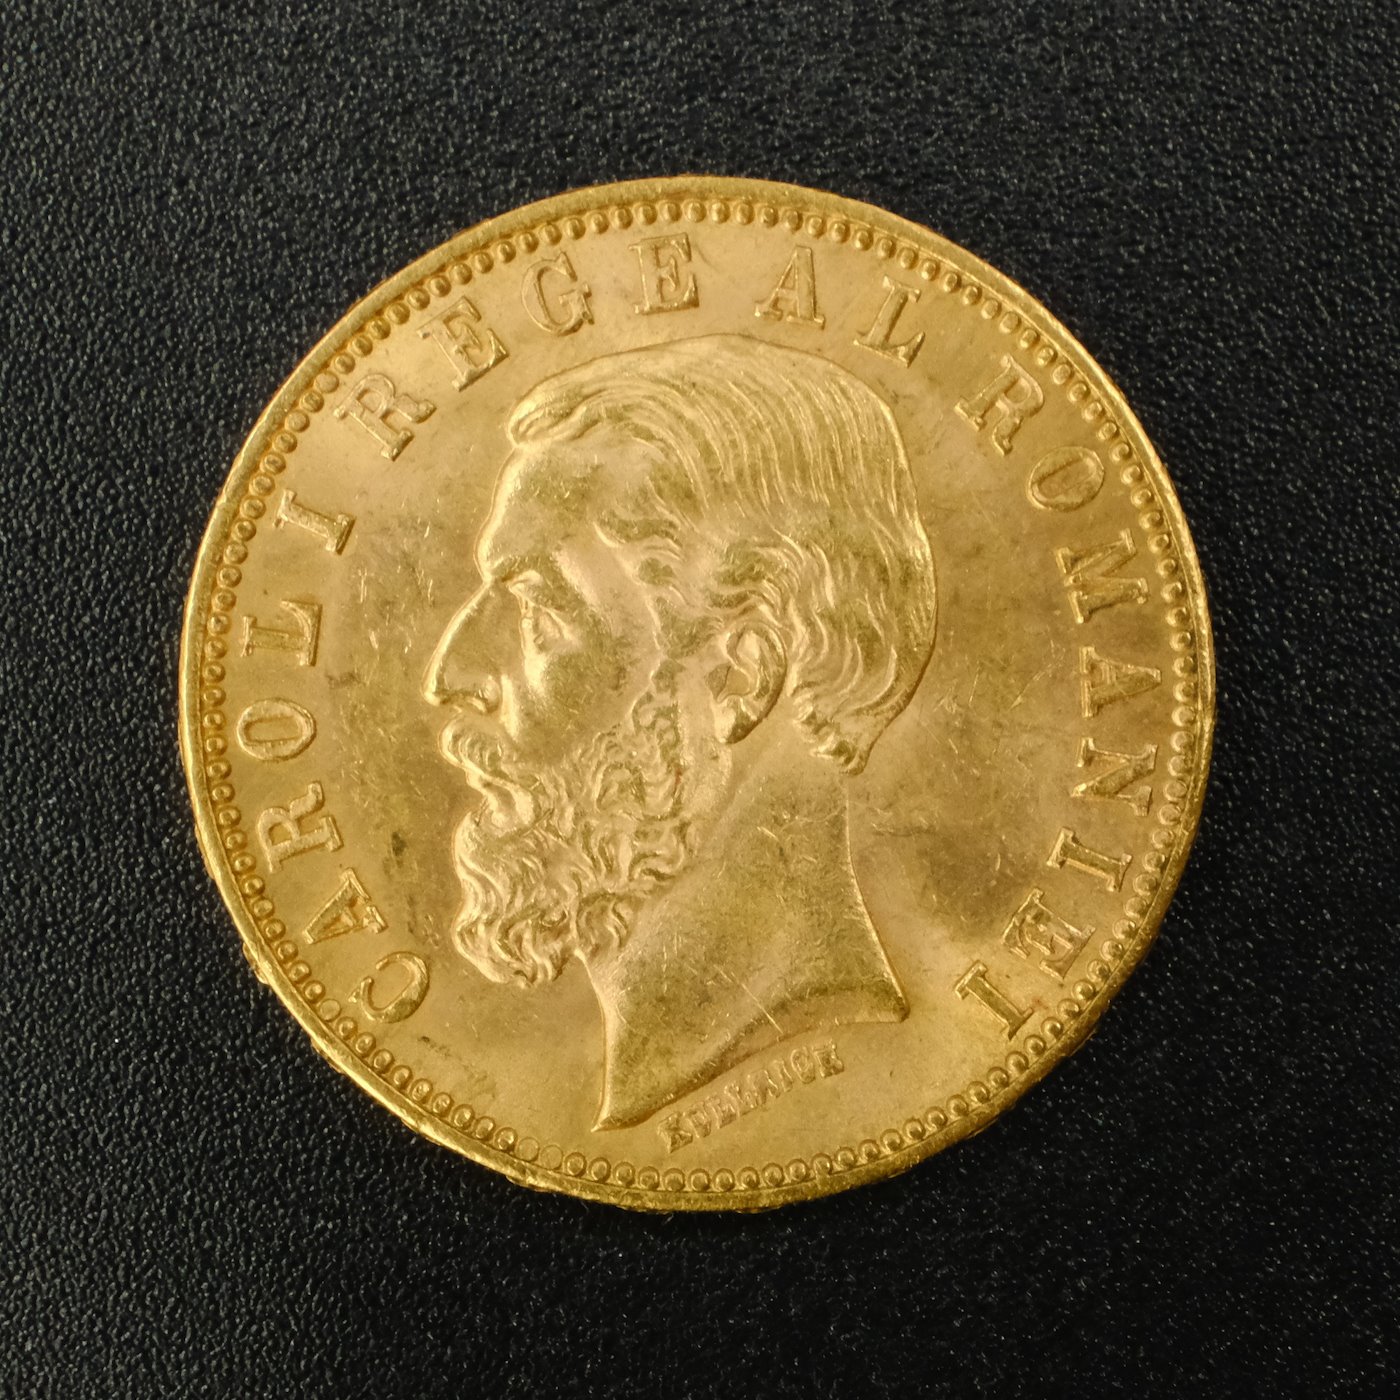 Mince - Rumunsko zlatý 20 LEI  KAREL I.1890 B, zlato 900/1000, hrubá hmotnost 6,45g